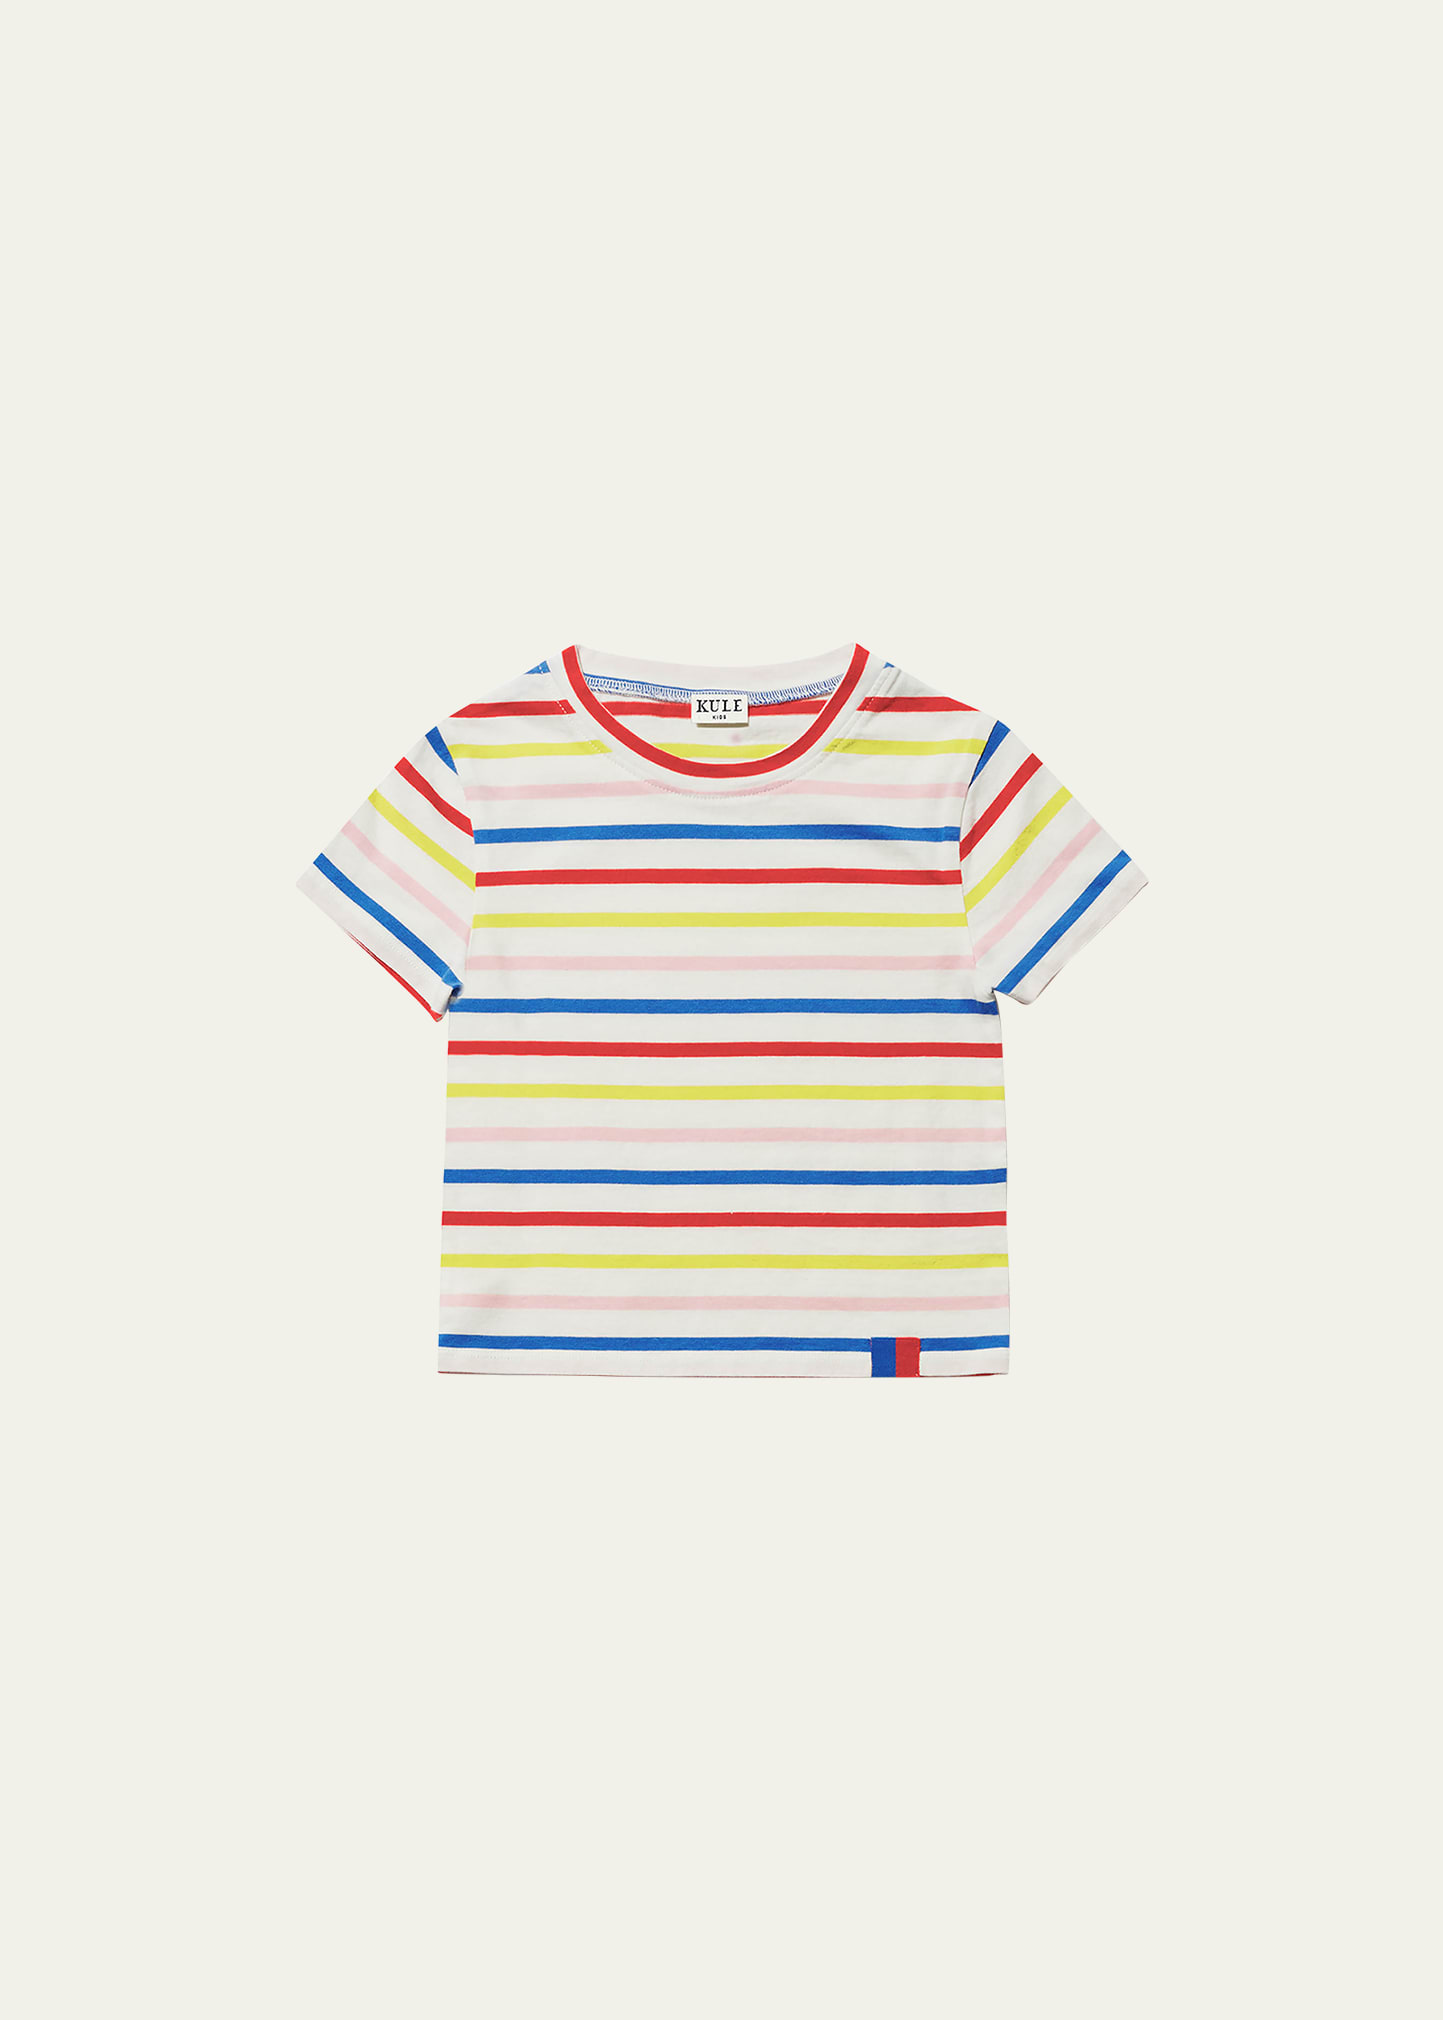 Kule Kid's Charley Stripe T-Shirt, Size 2-8